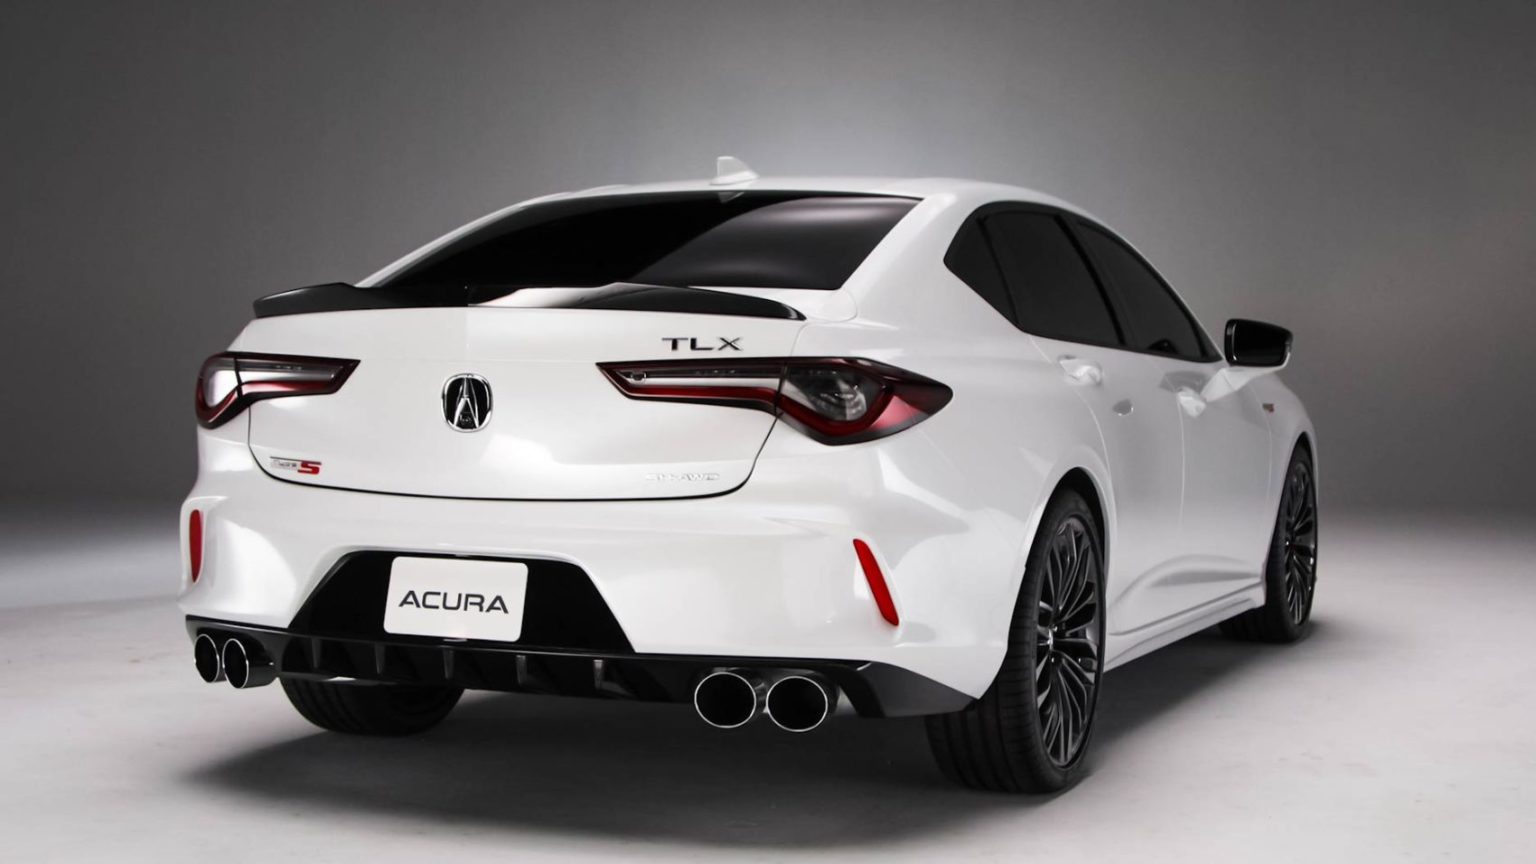 2021 Acura TLX: Renaissance of Japanese Sport Sedans? We Think So!